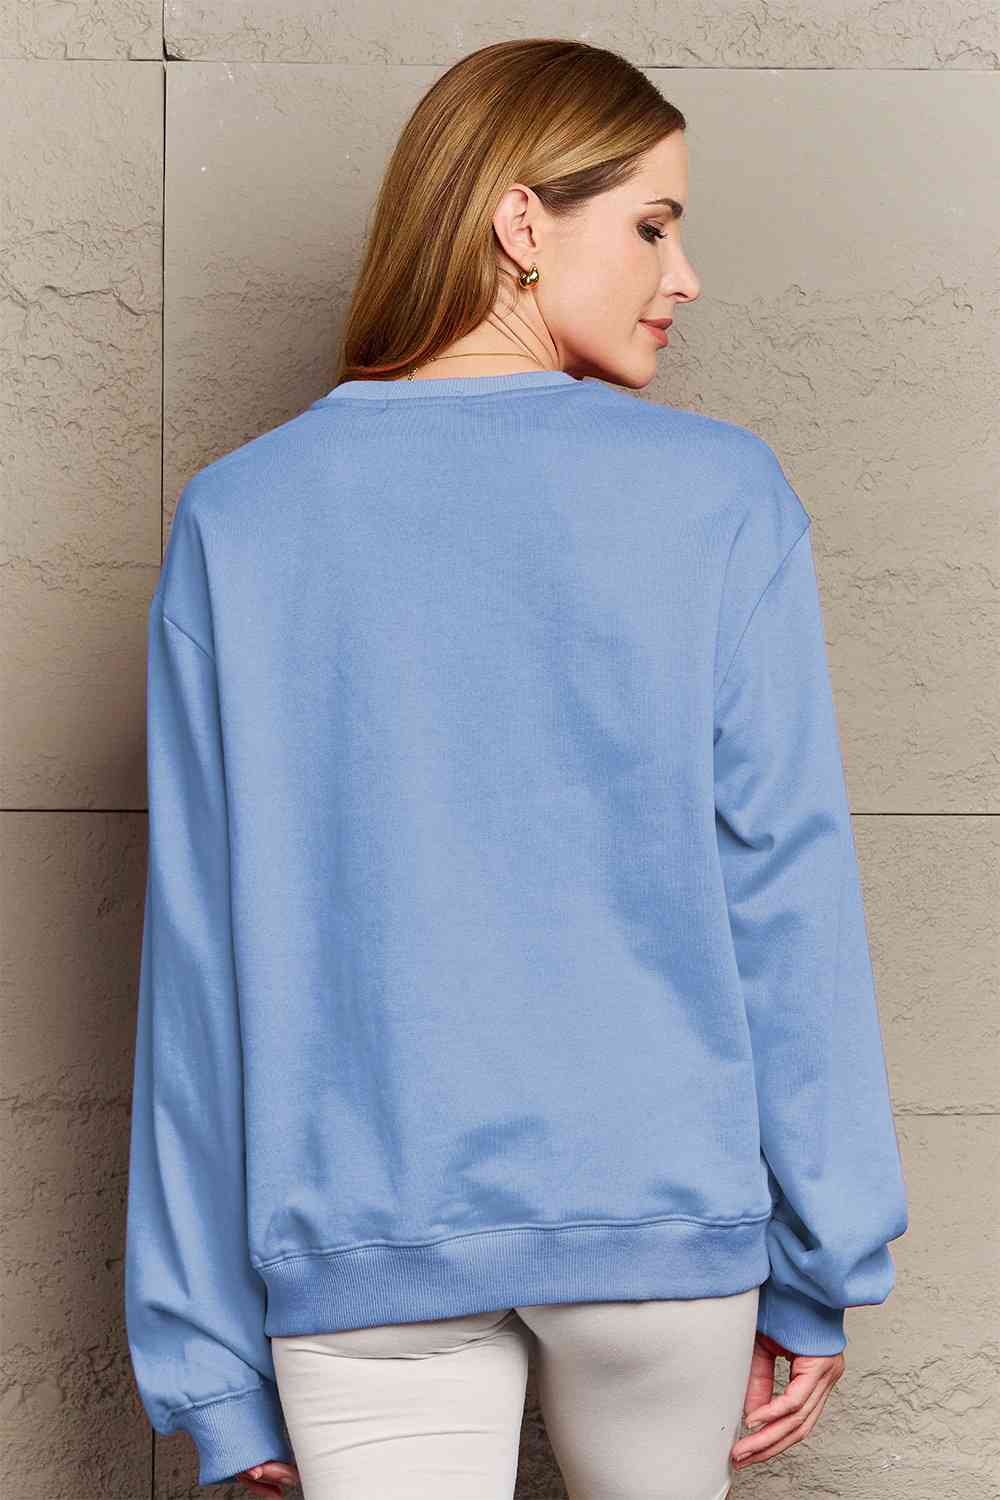 Simply Love Full Size THANKFUL Graphic Sweatshirt BLUE ZONE PLANET